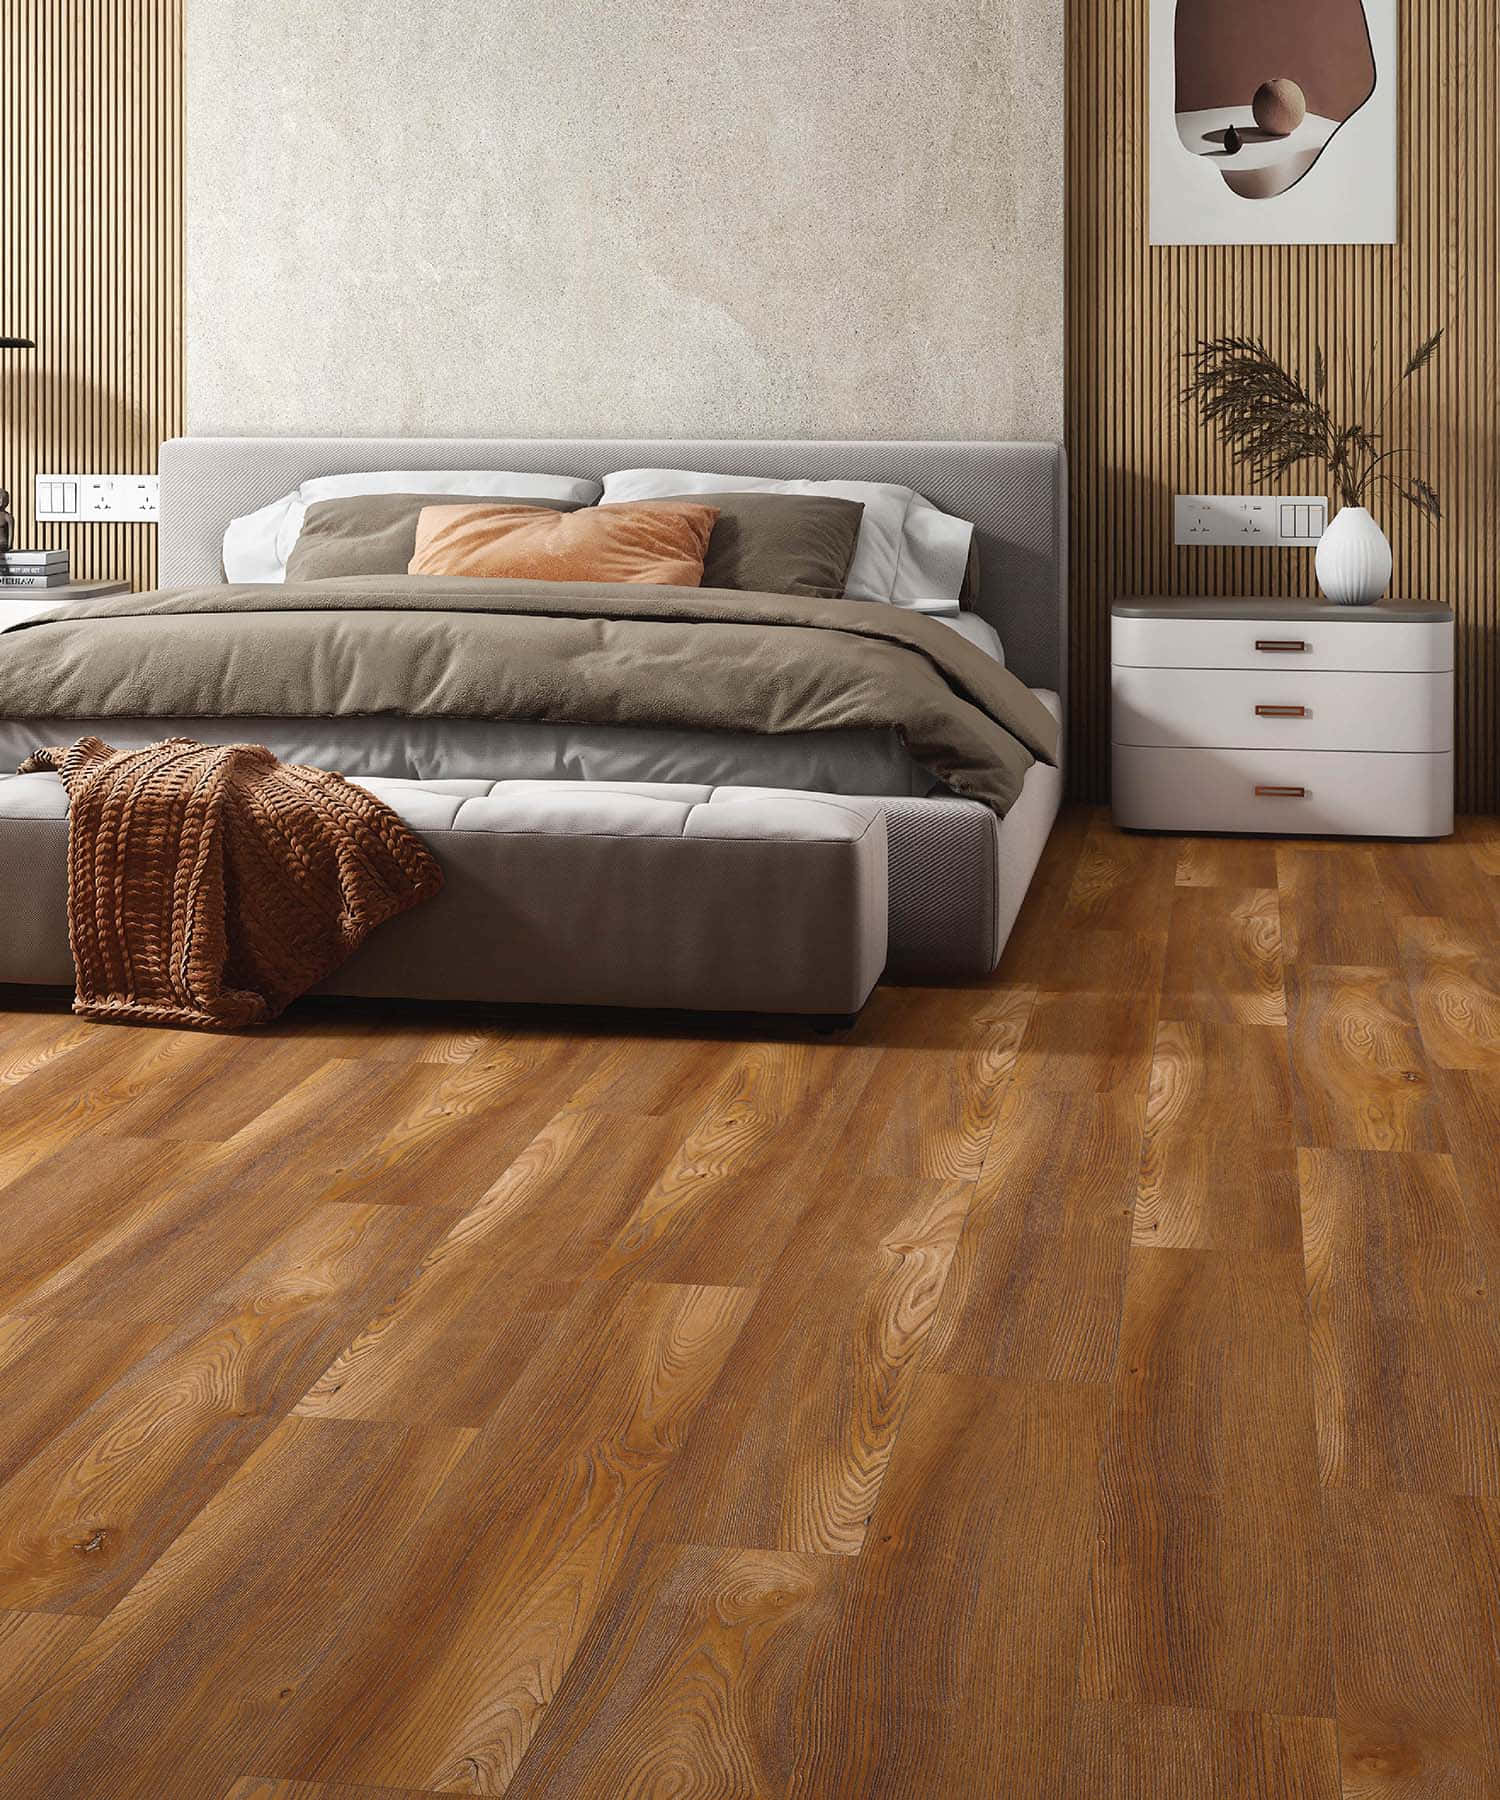 Elegant Bedroom With Brisk Wooden Tiles Wallpaper